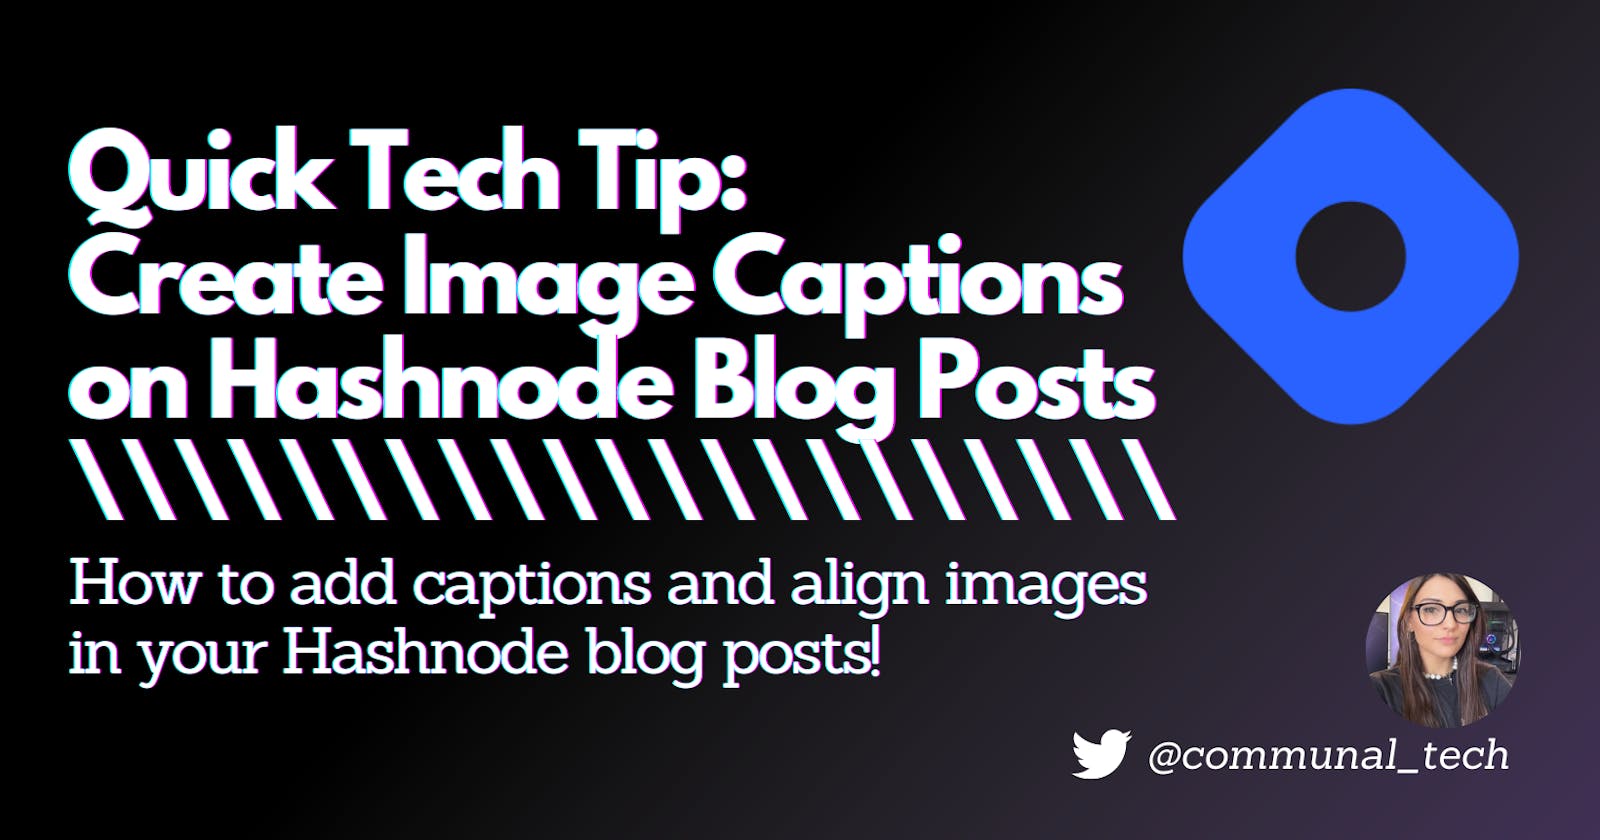 Quick Tech Tip: Create Image Captions on Hashnode